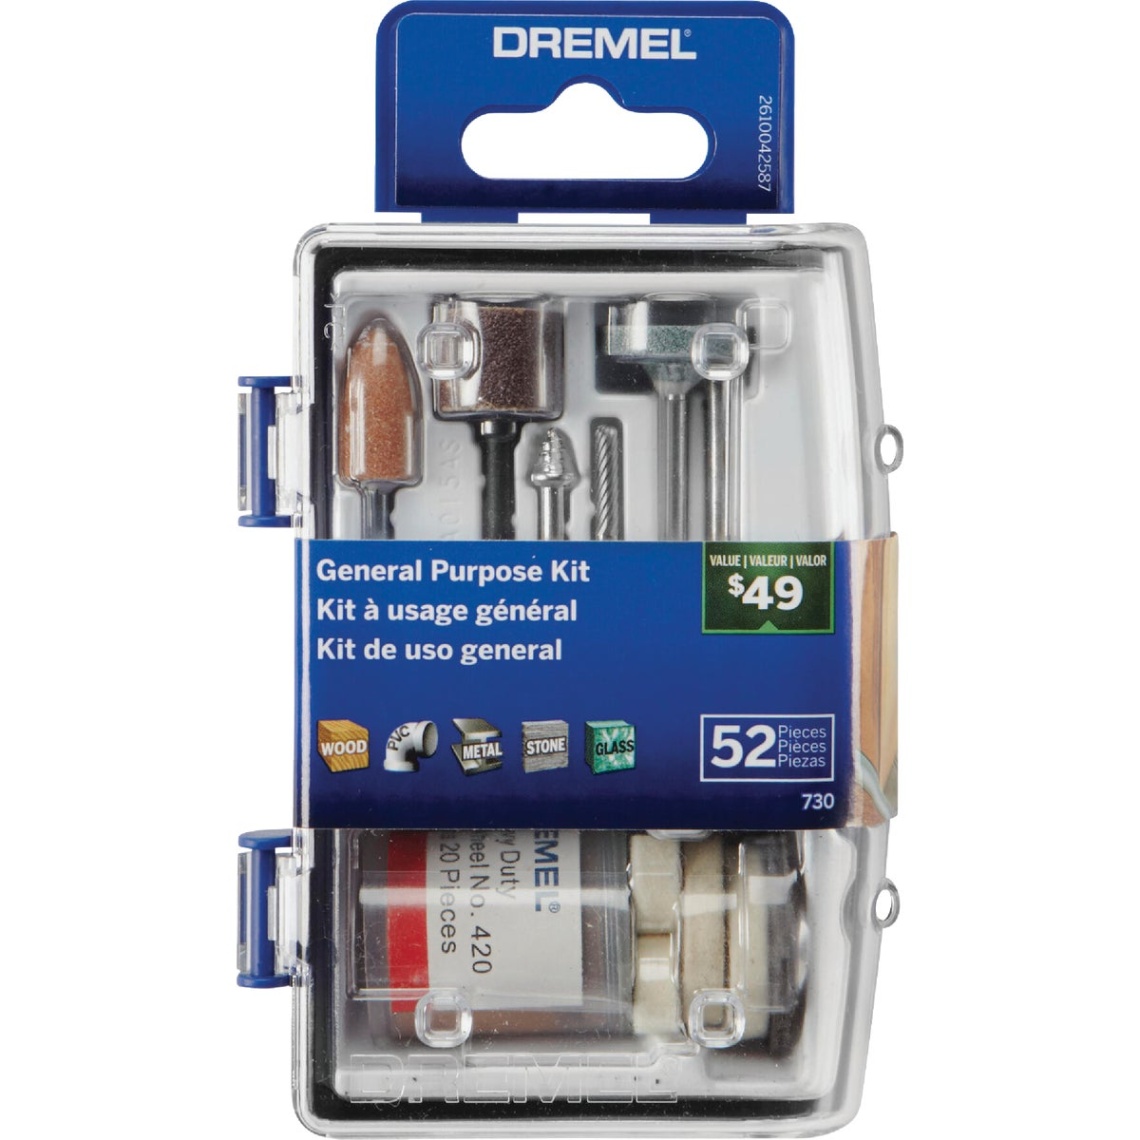 dremel tools and accessories Niche Utama Home Dremel General Purpose Rotary Tool Accessory Kit (-Piece